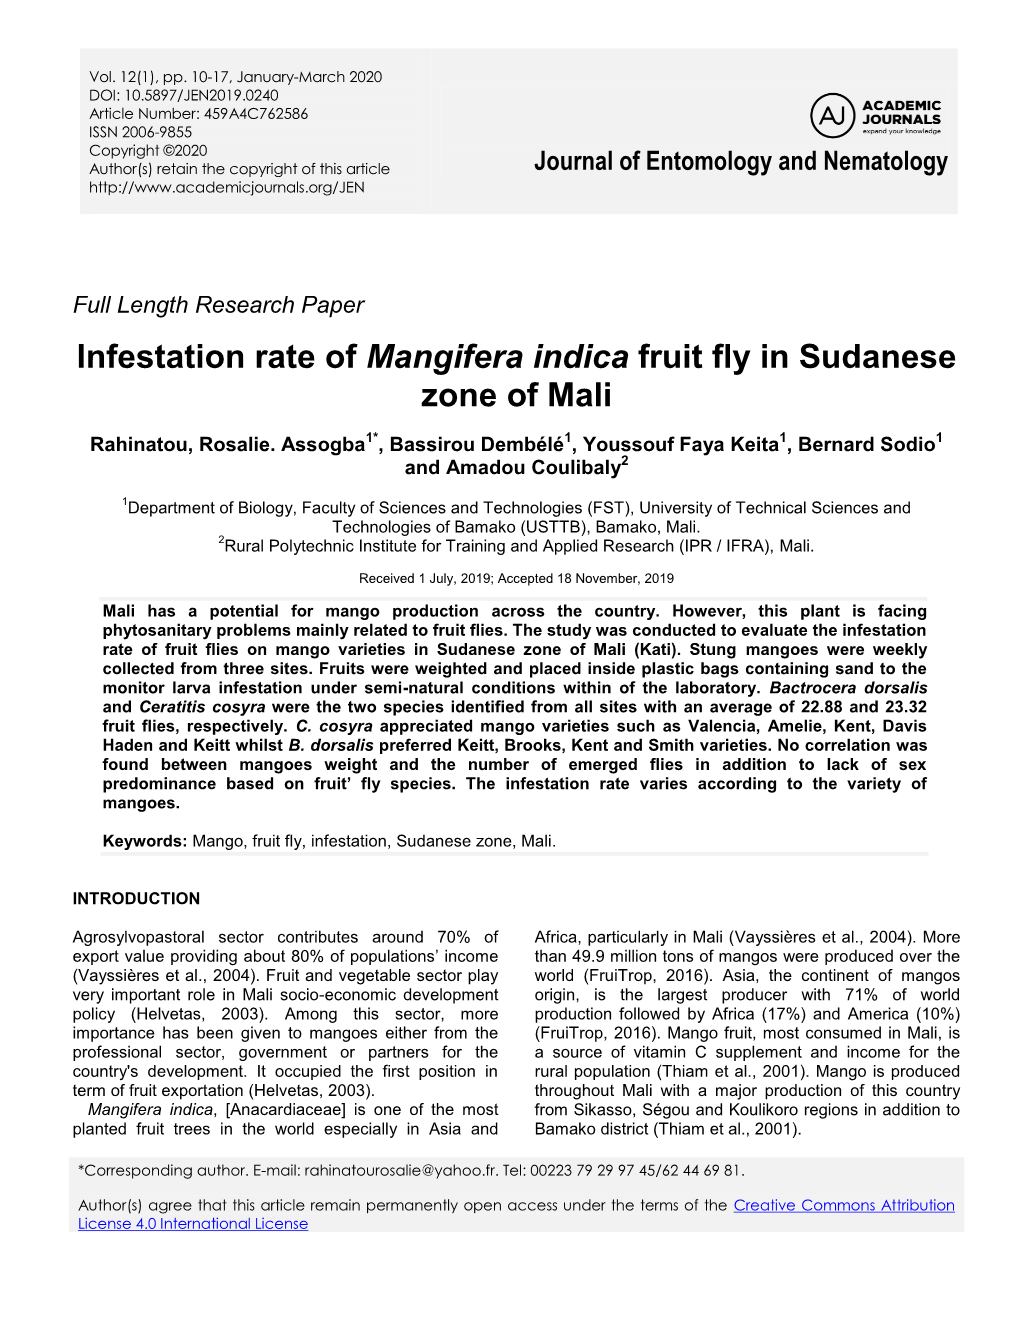 Infestation Rate of Mangifera Indica Fruit Fly in Sudanese Zone of Mali